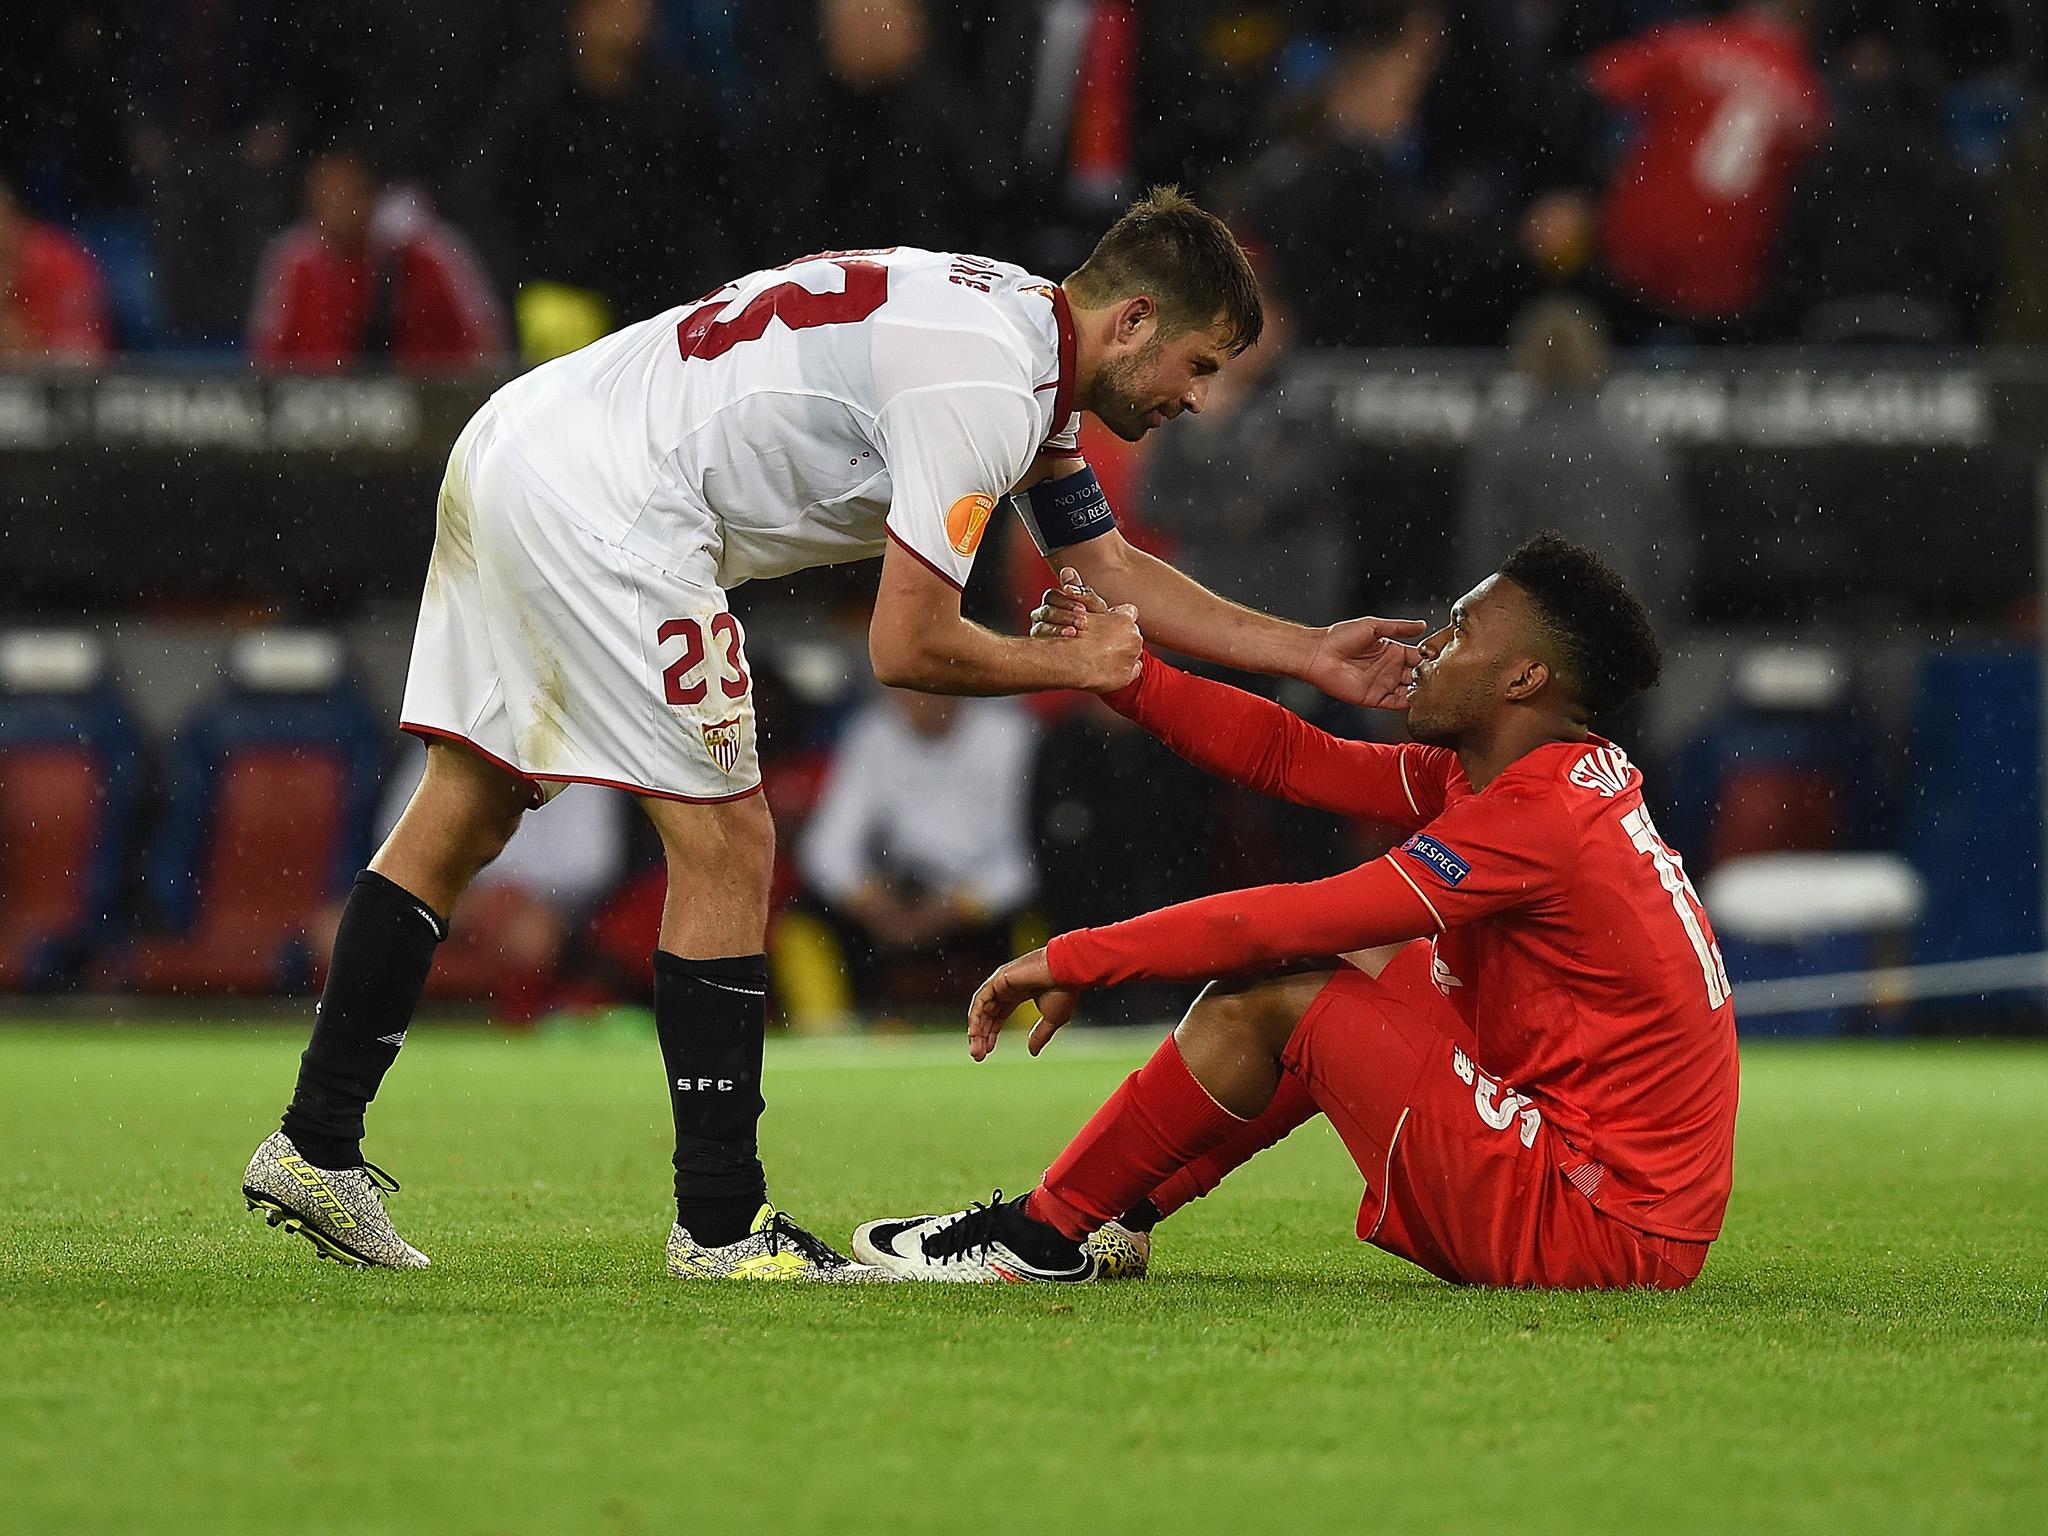 Daniel Sturridge is devastated as Liverpool lose their Europa League final